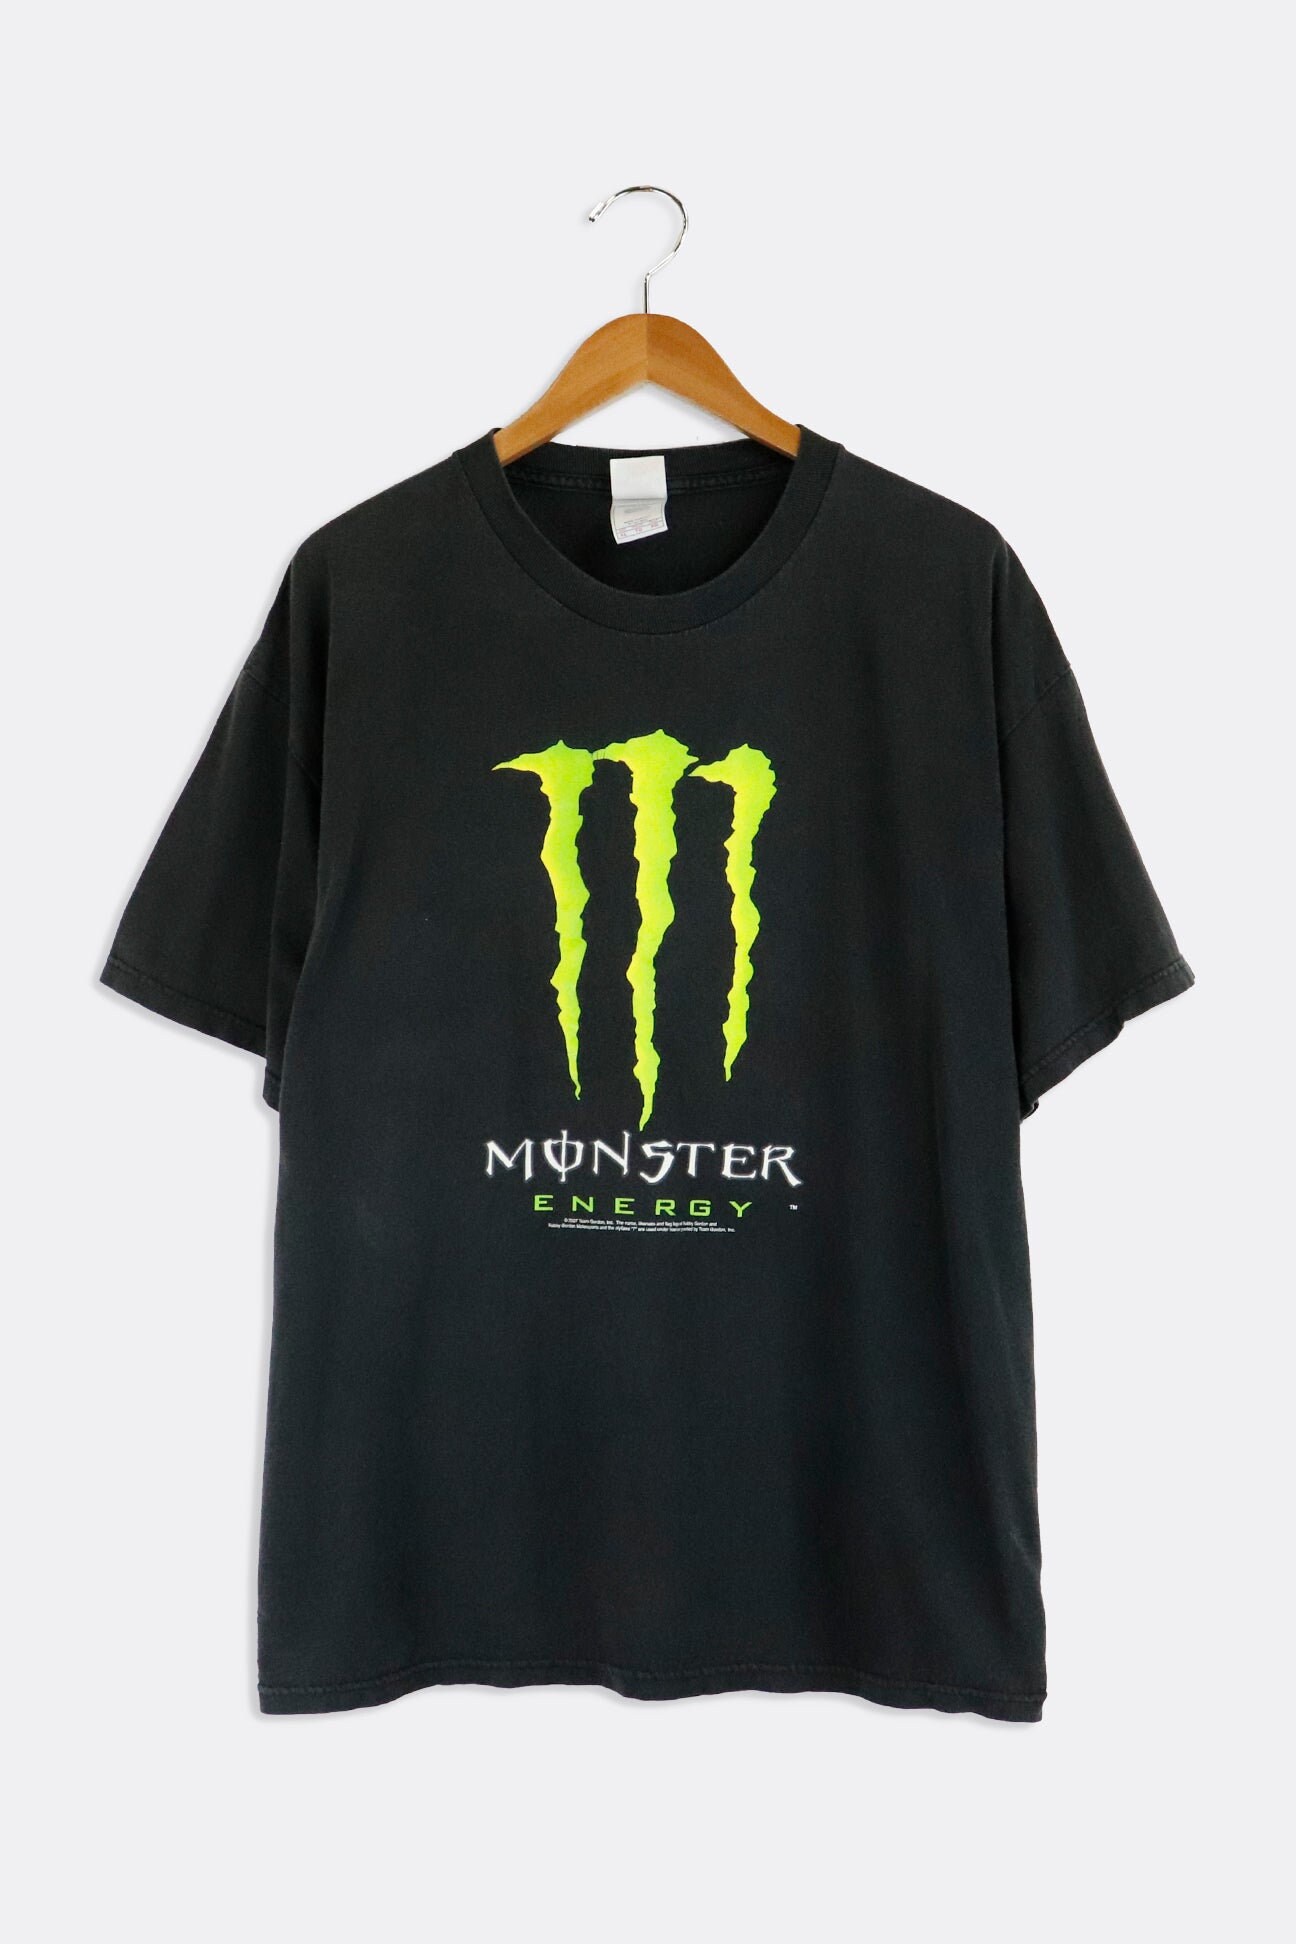 Vintage Monster Energy T Shirt XL -